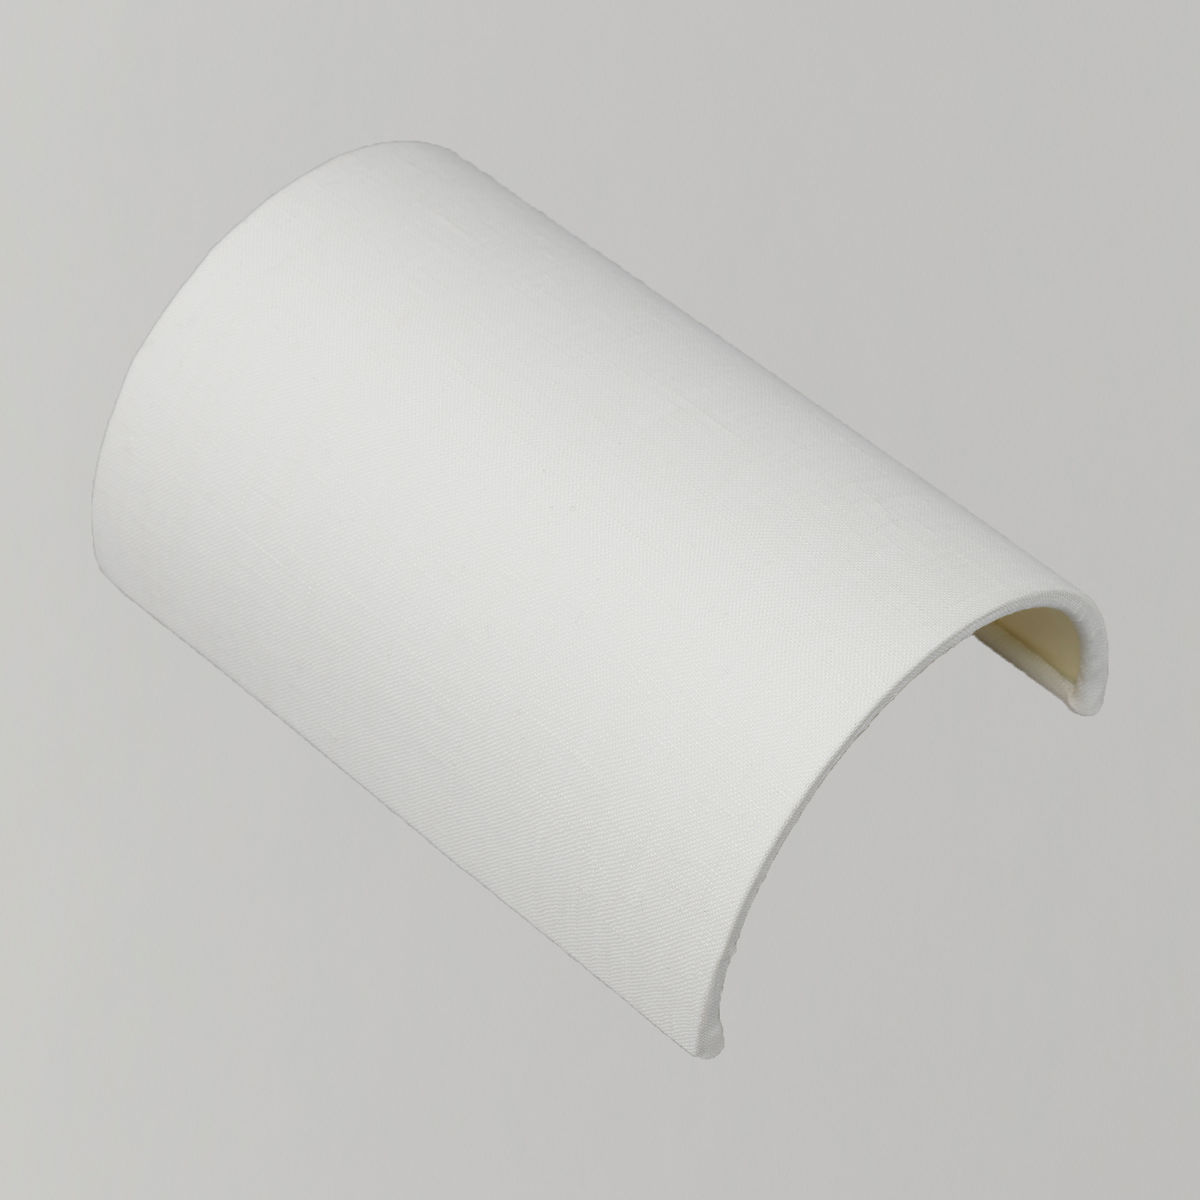 Half cylindrical lampshade